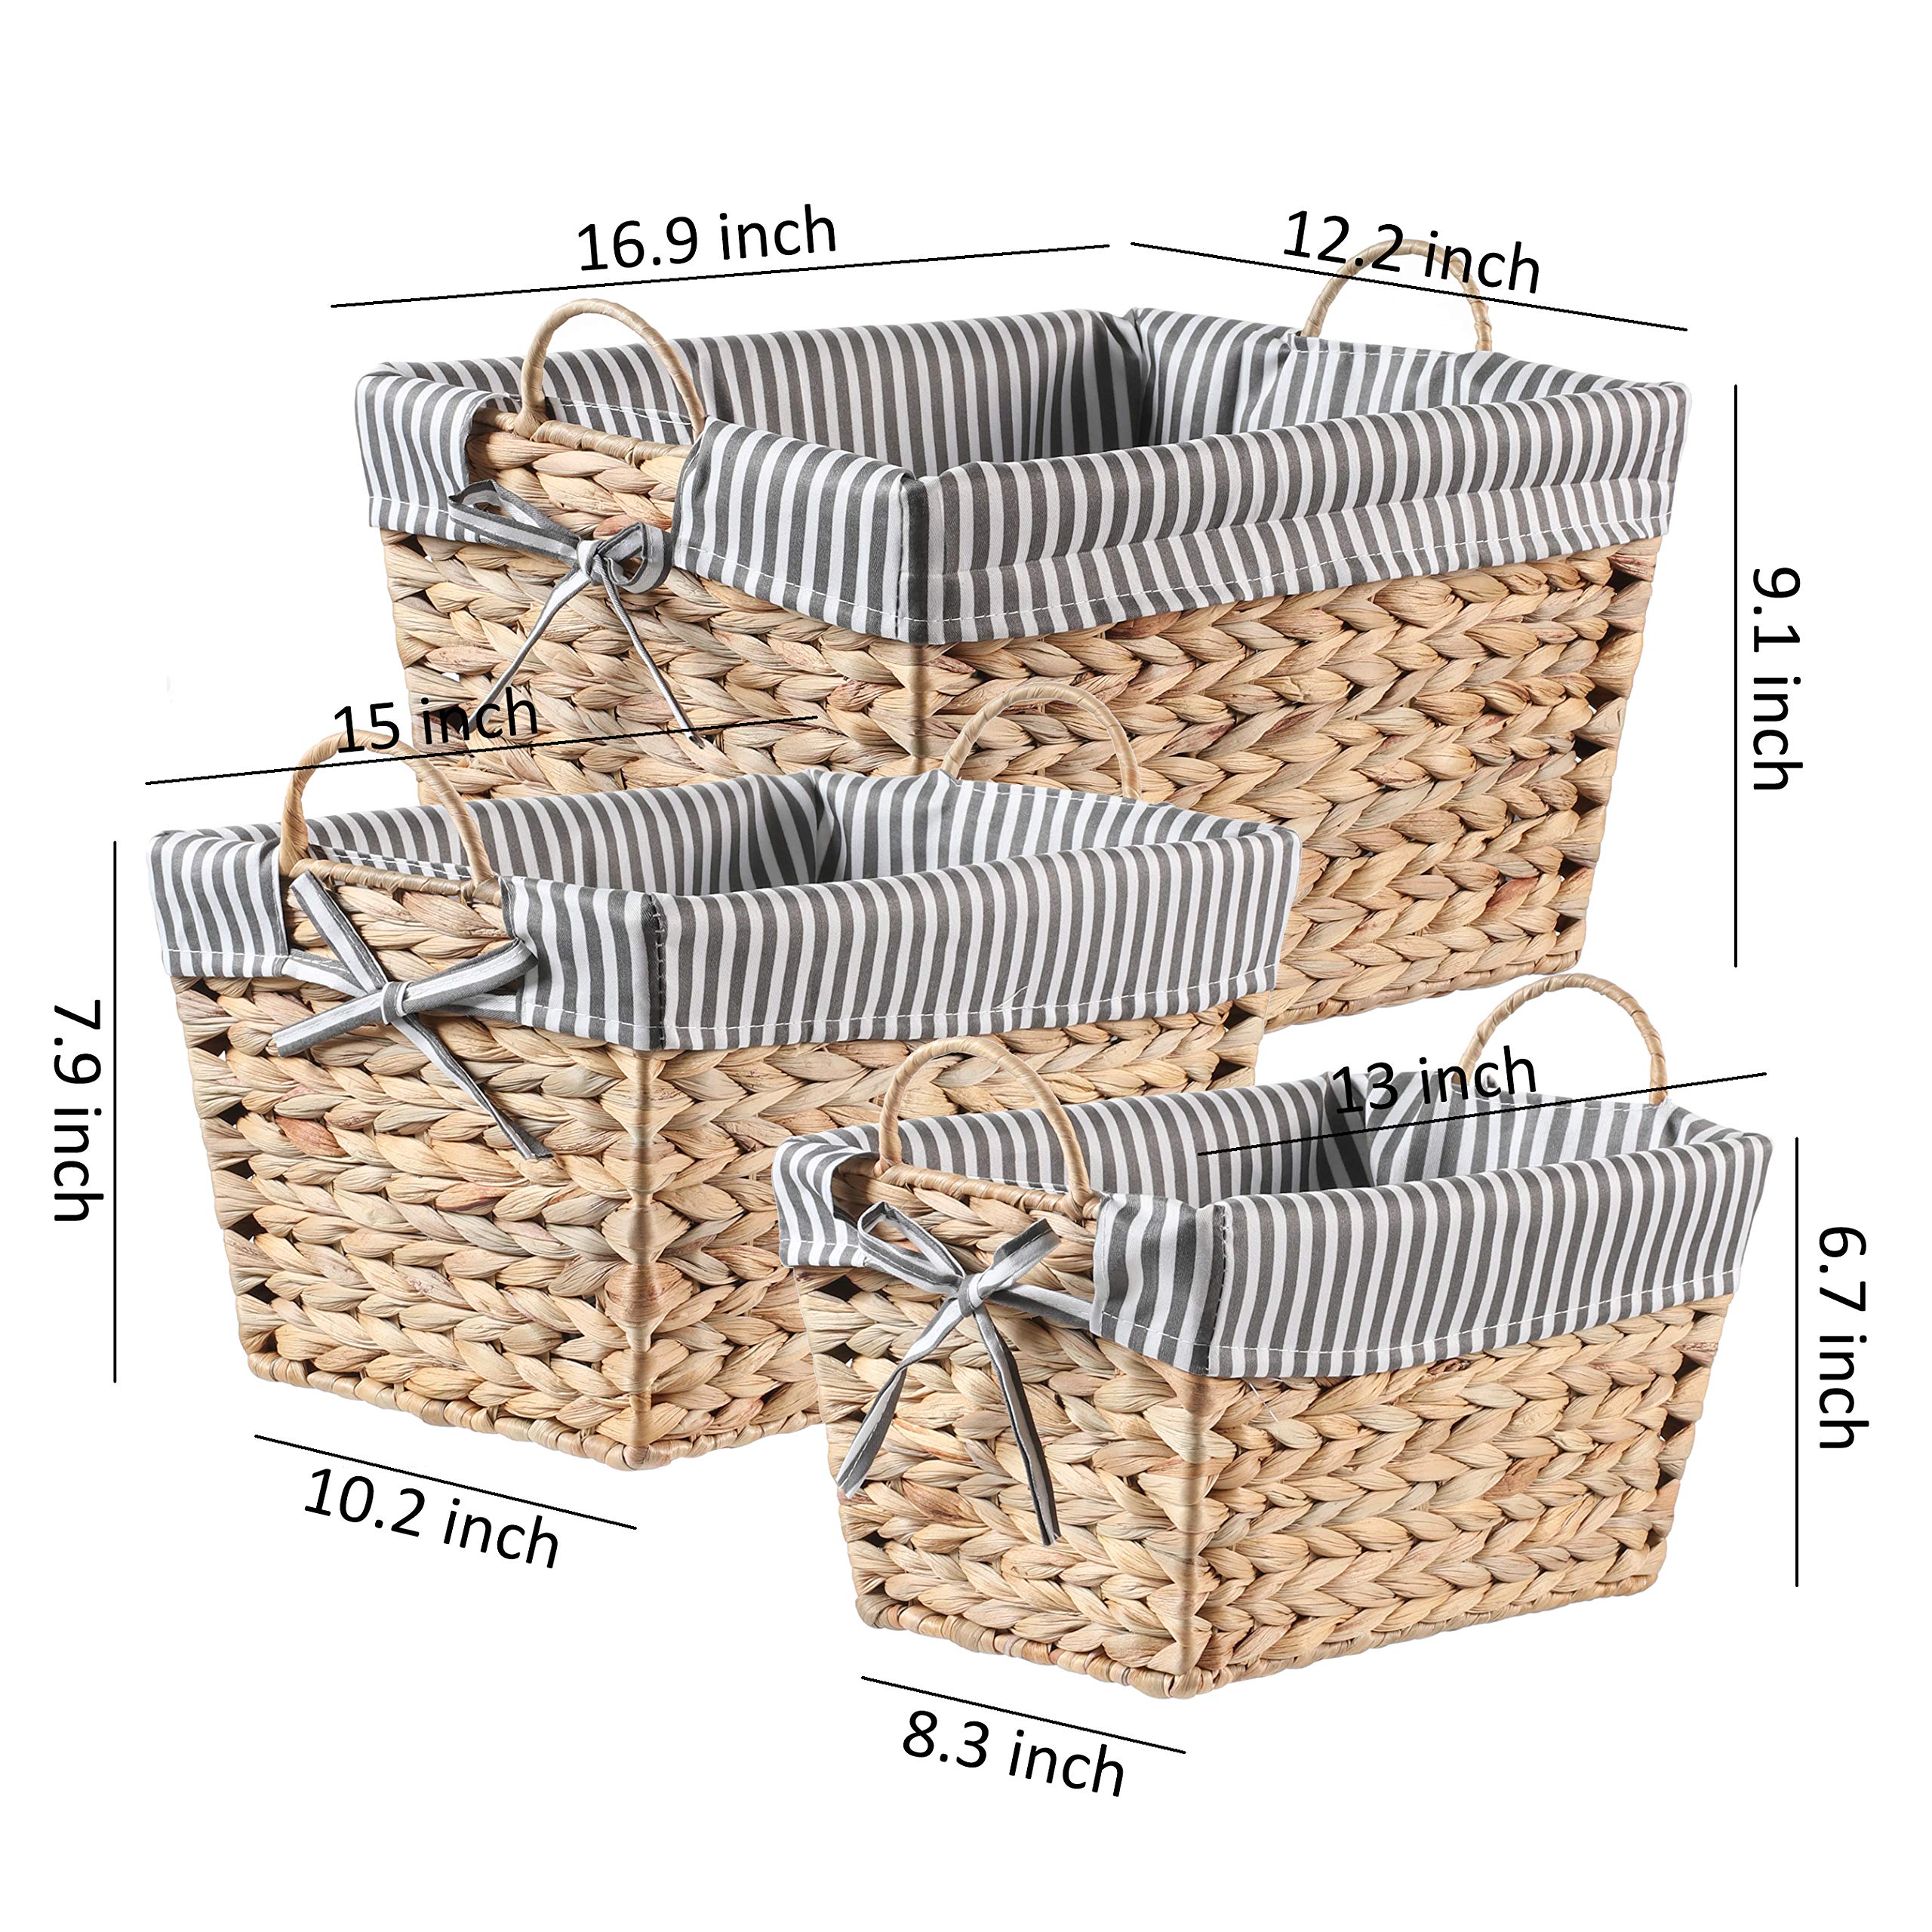 Motifeur Handmade Water Hyacinth Wicker Baskets, Utility Storage Organizers With Removable Liner (Set of 3, Jumbo: 16.9"x12.2"x9.1", Large: 15"x10.2"x7.9", Medium: 13"x8.3"x6.7", Beige + Gray/White)